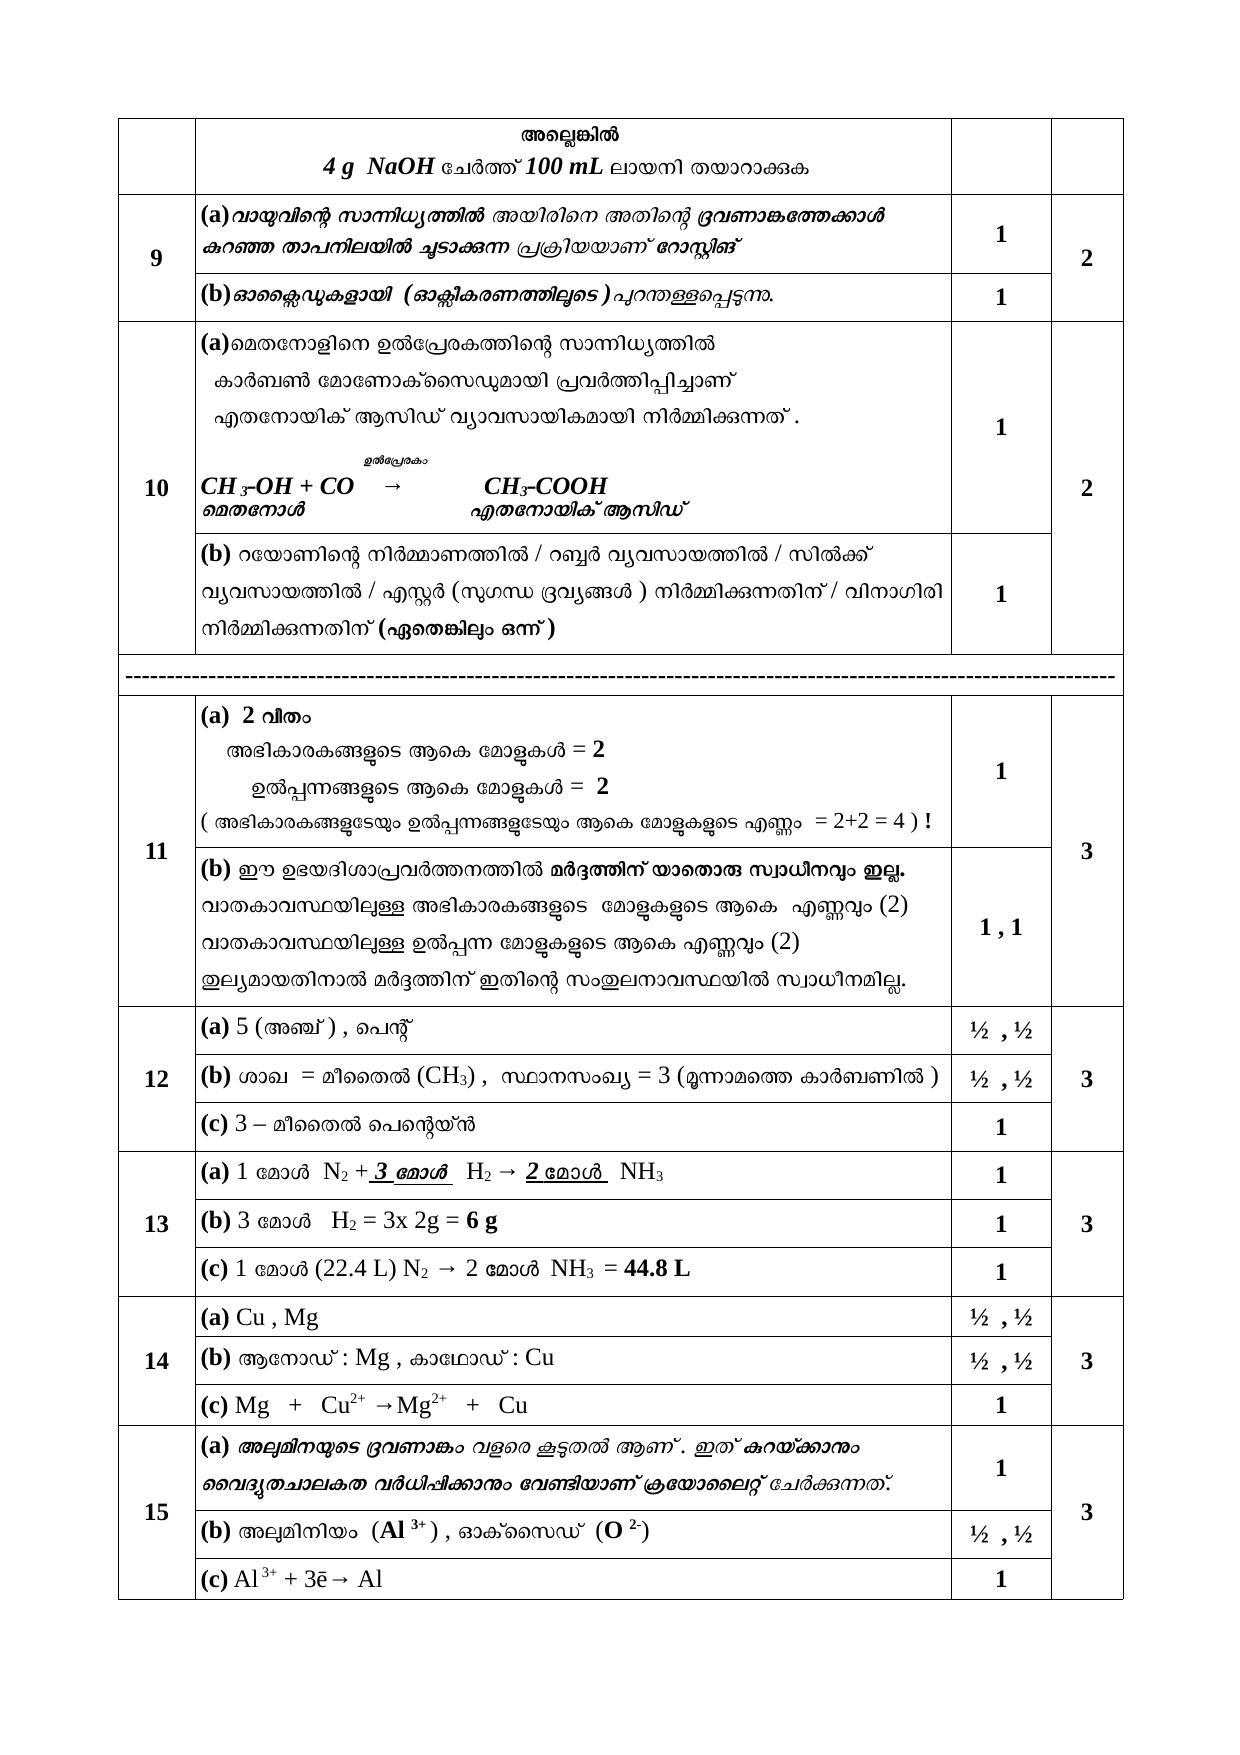 Kerala SSLC 2019 Chemistry Answer Key (MM) - Page 2